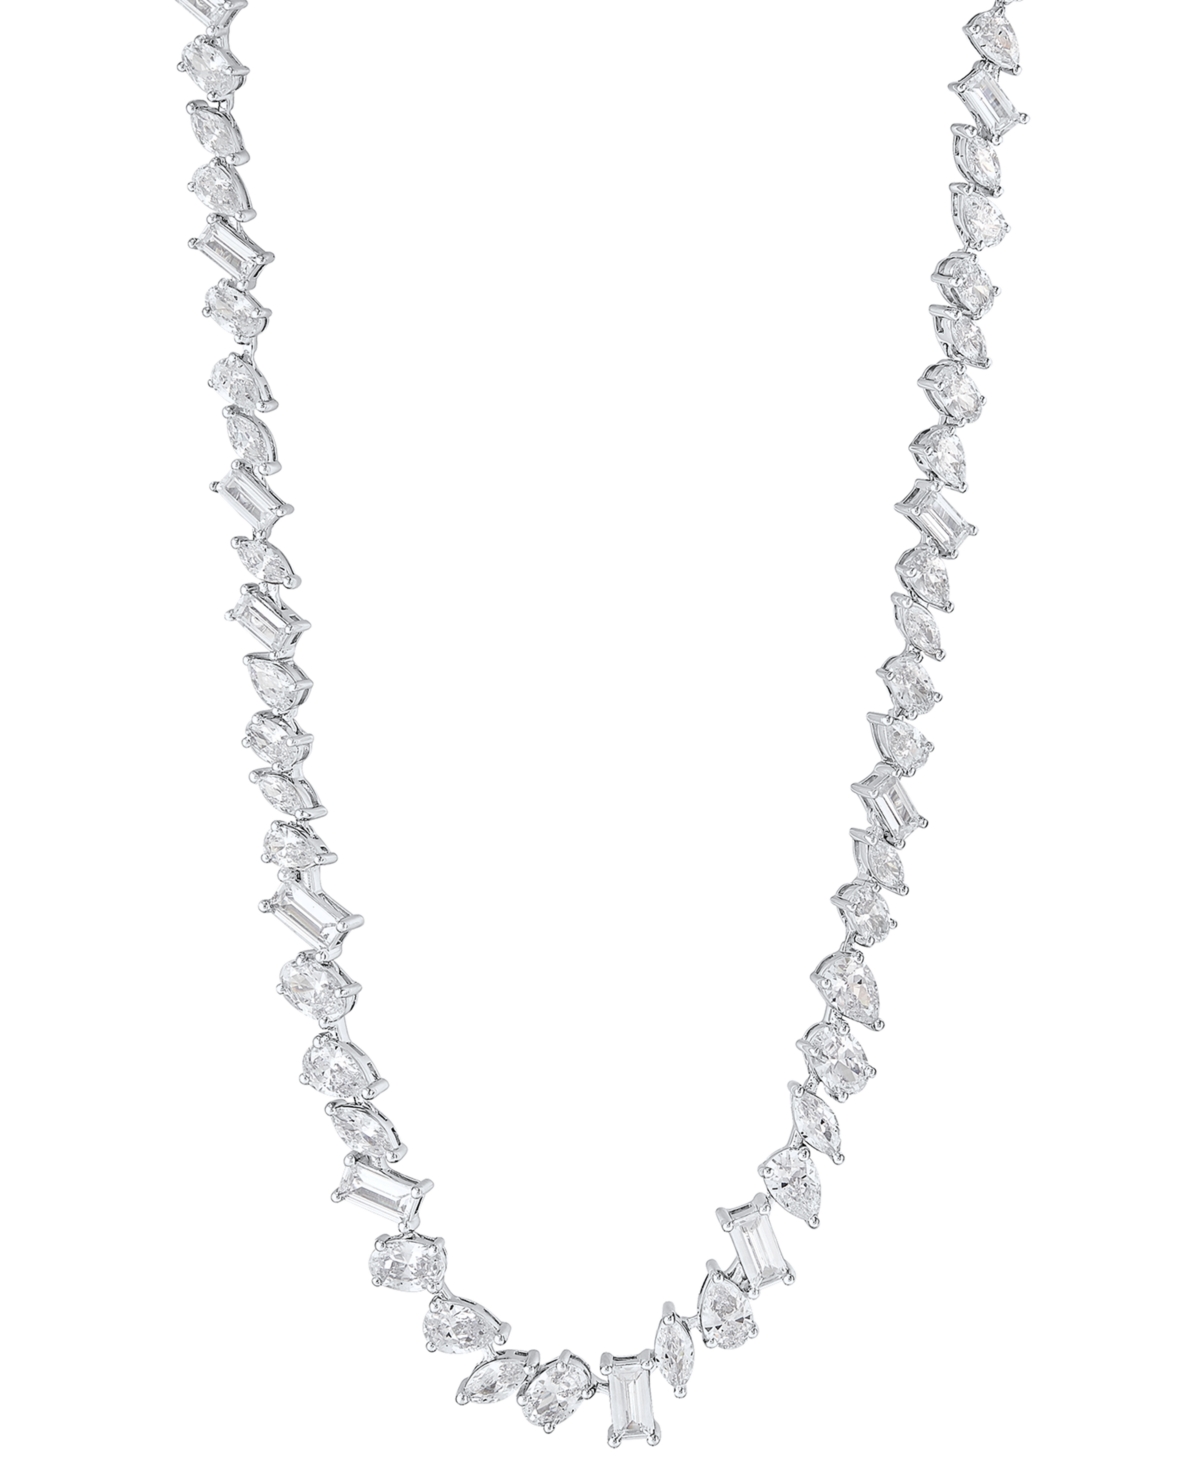 Arabella Cubic Zirconia Multi-Cut Collar Necklace in Sterling Silver, 15" + 3" extender